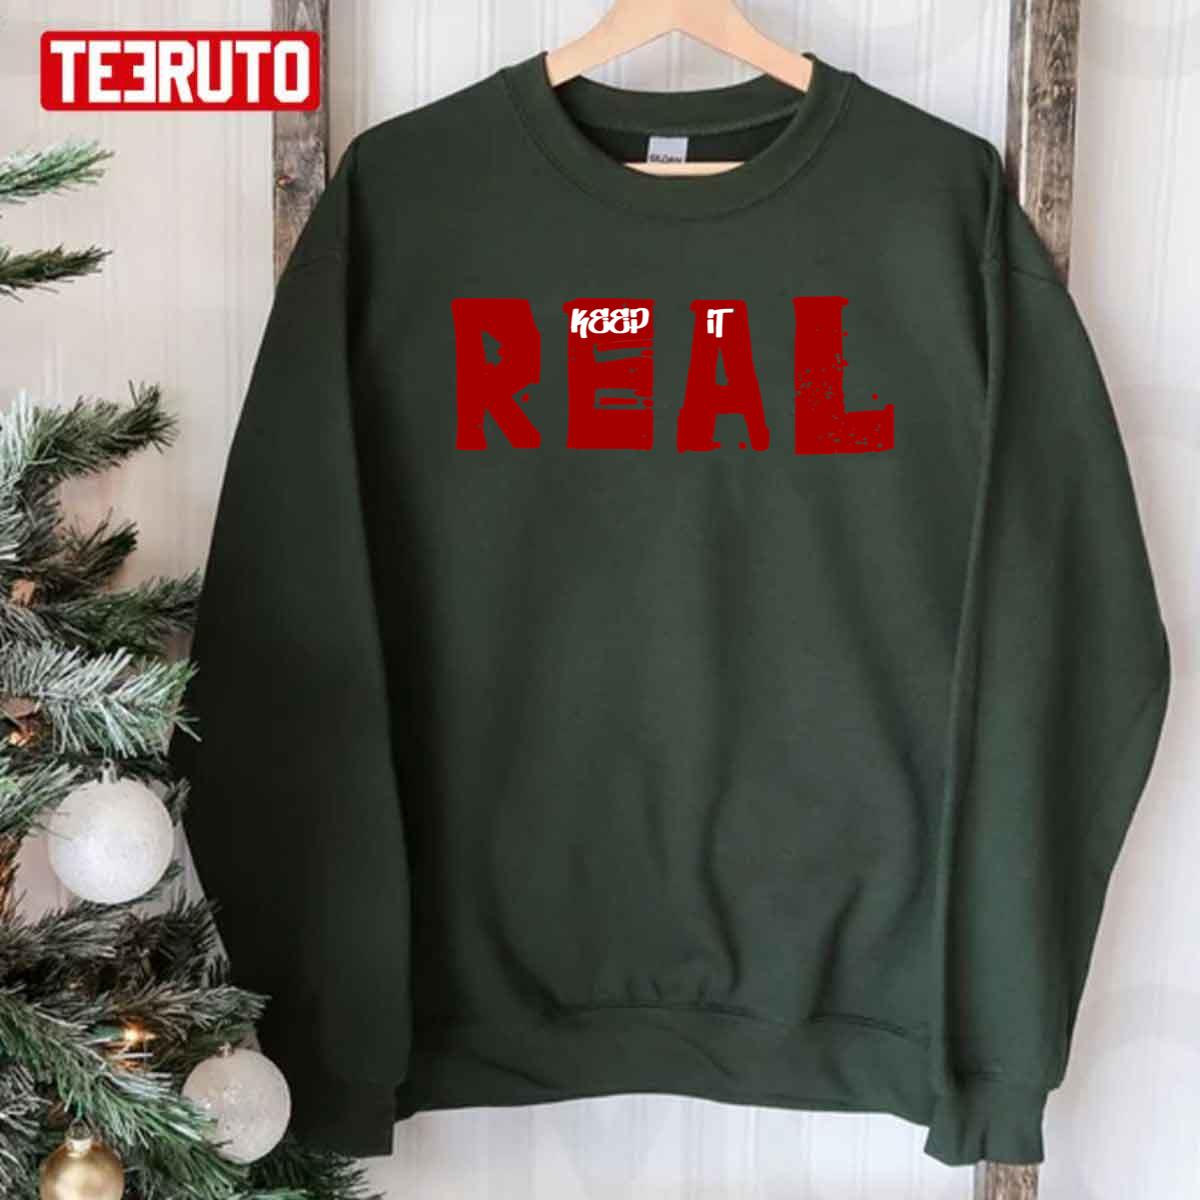 Keep It Real Unisex Sweatshirt